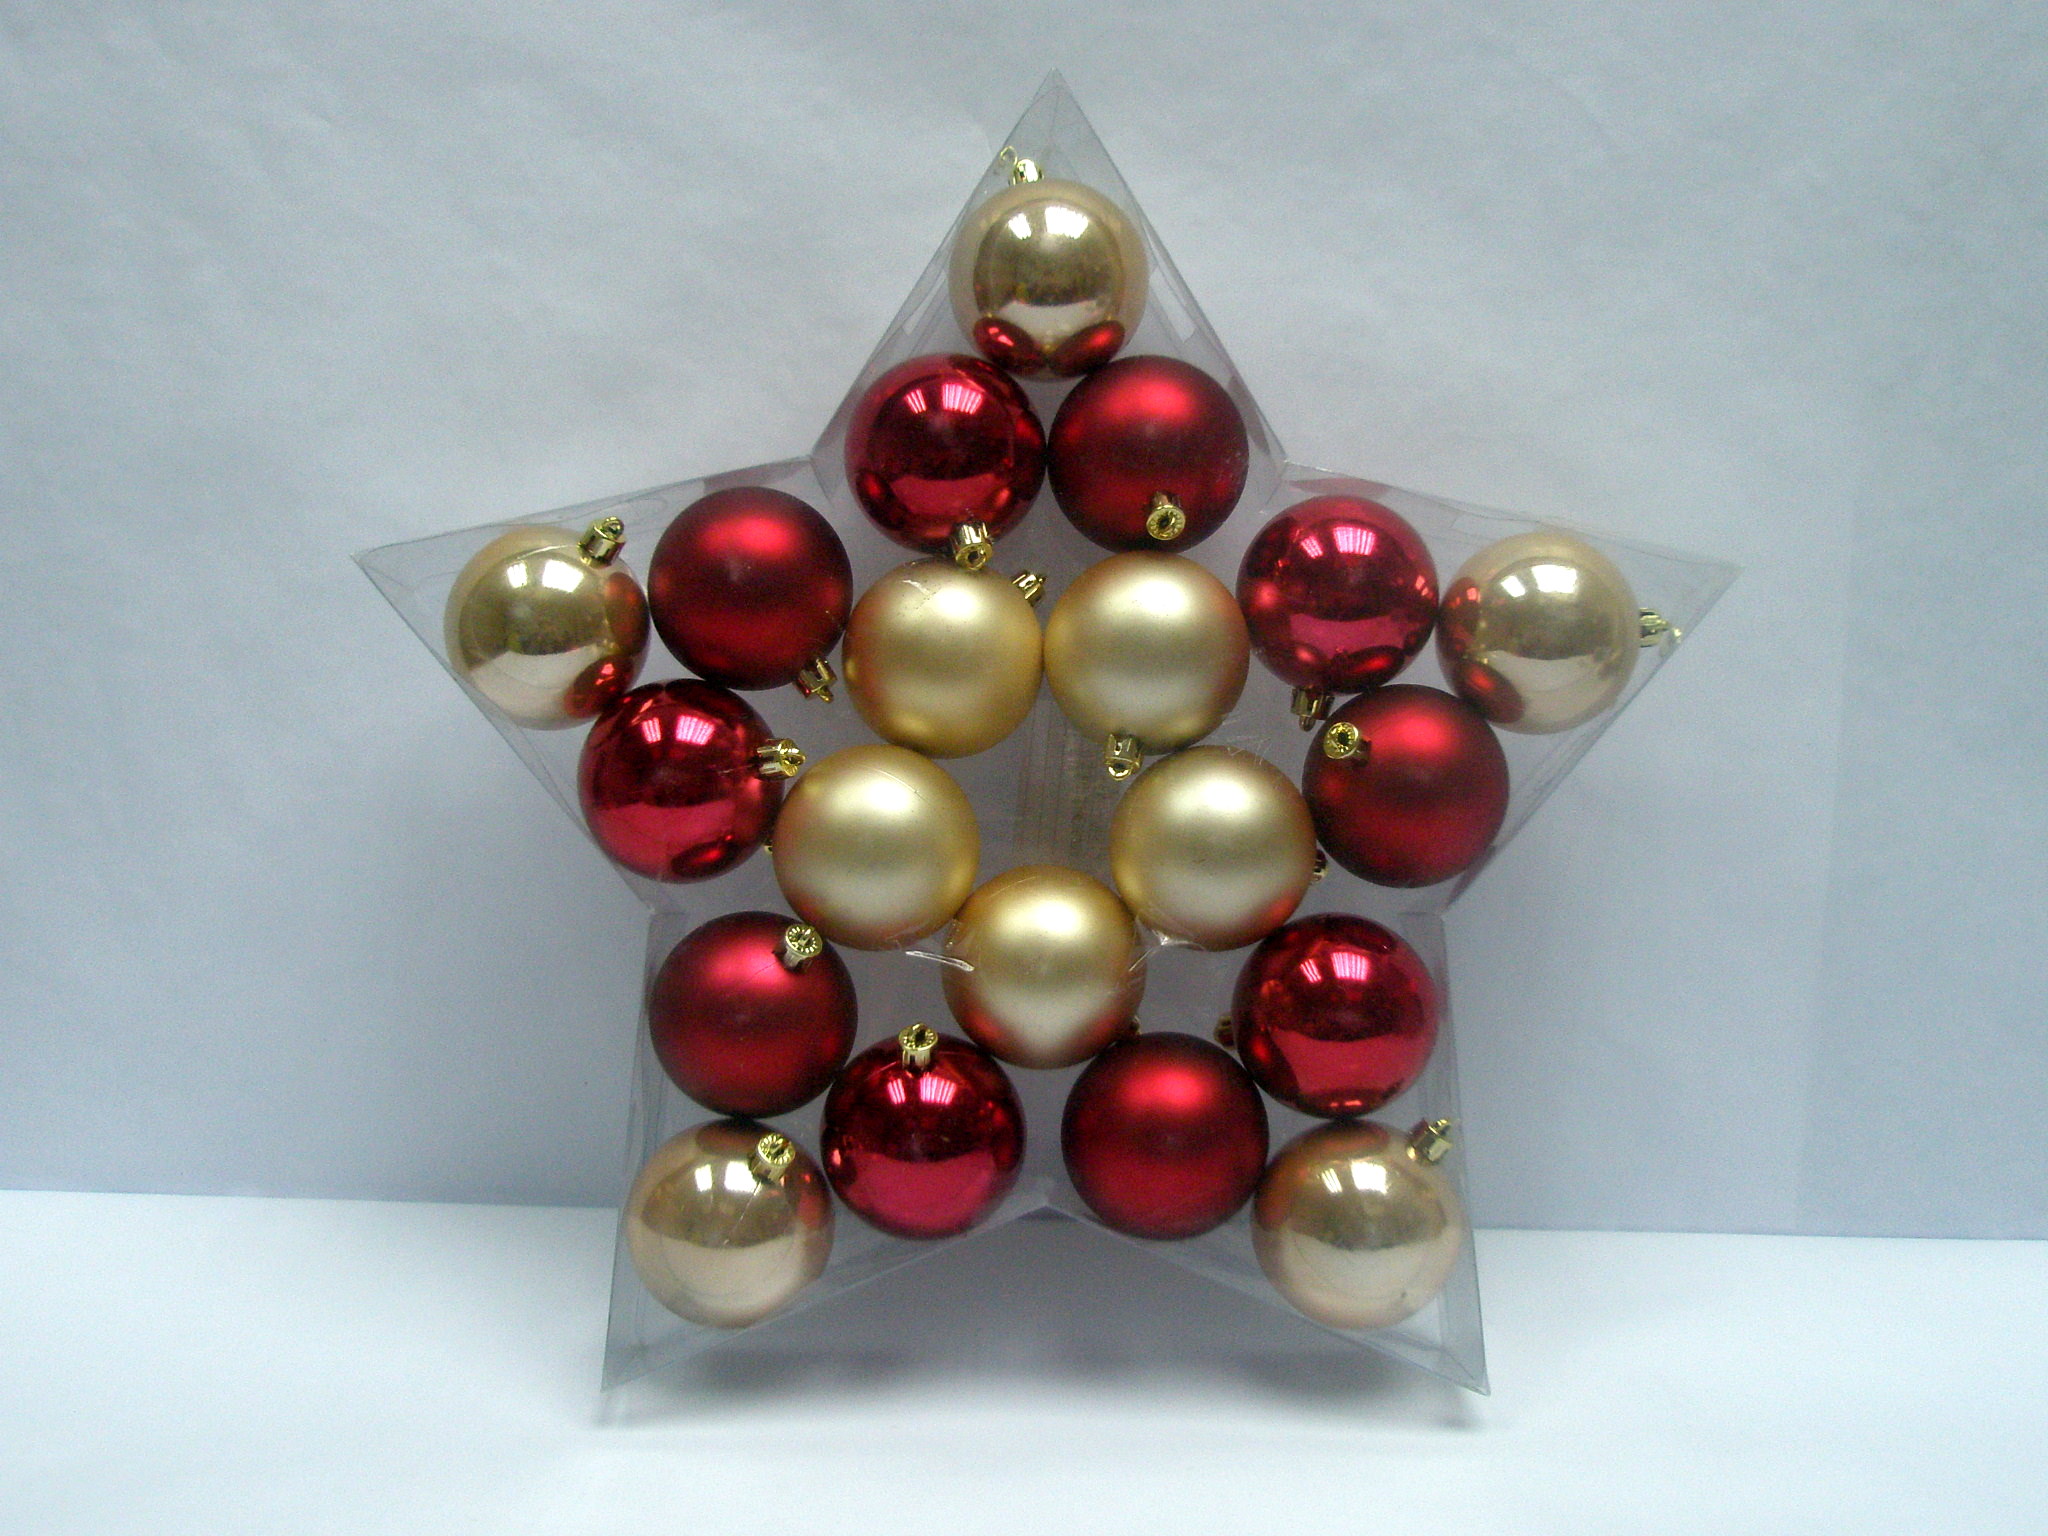 Ornamental Christmas Decorations Plastic Ball